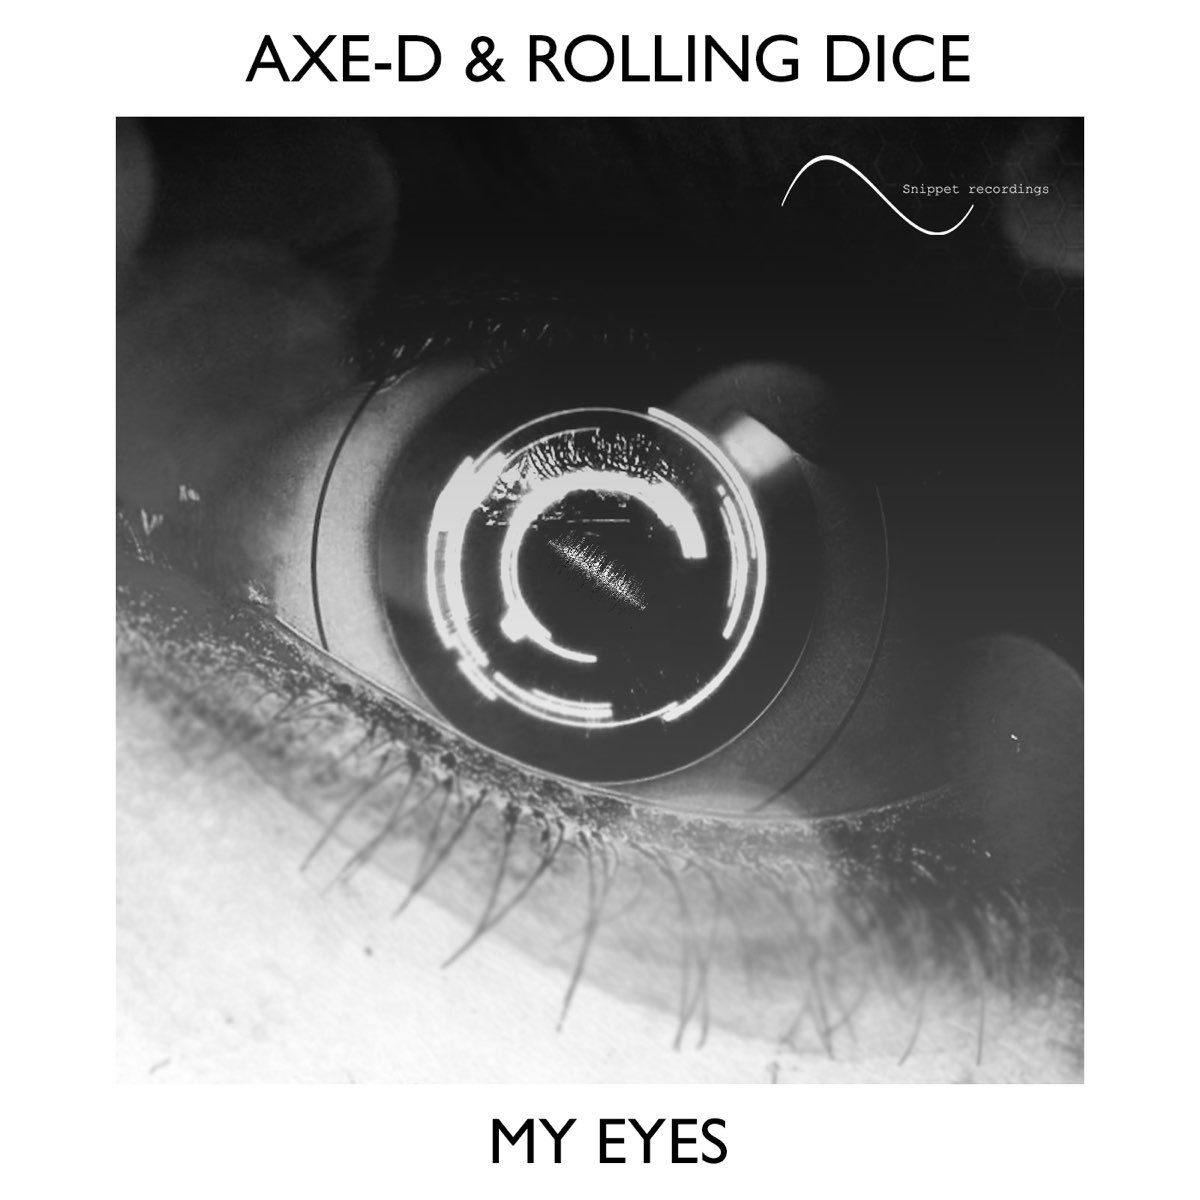 Roll me песня. Обложка для песни dices. D-Axe песни. Песенка Rolling dice. Roll my Eyes.